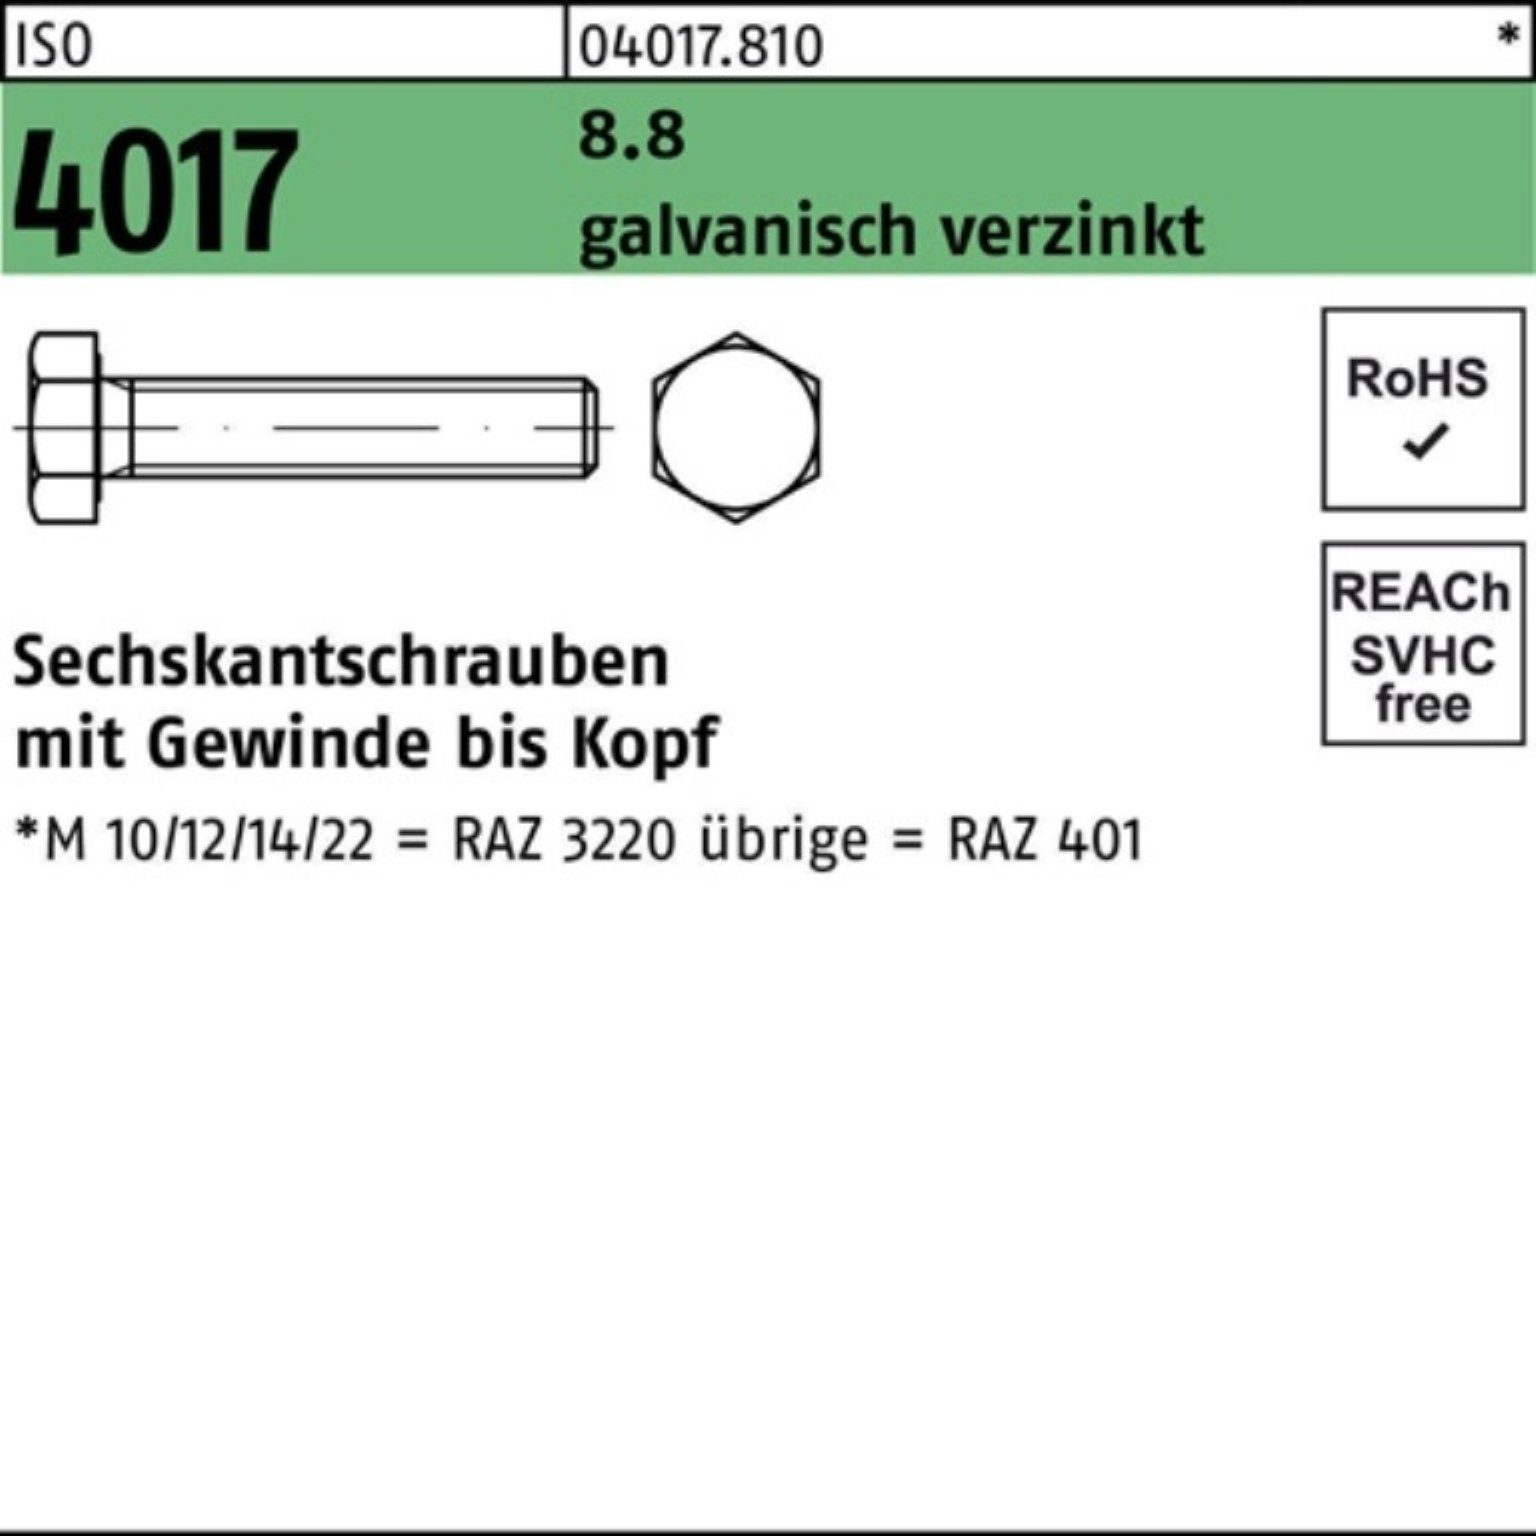 Bufab Sechskantschraube 100er Pack Sechskantschraube ISO 4017 VG M16x 100 8.8 galv.verz. 25 St